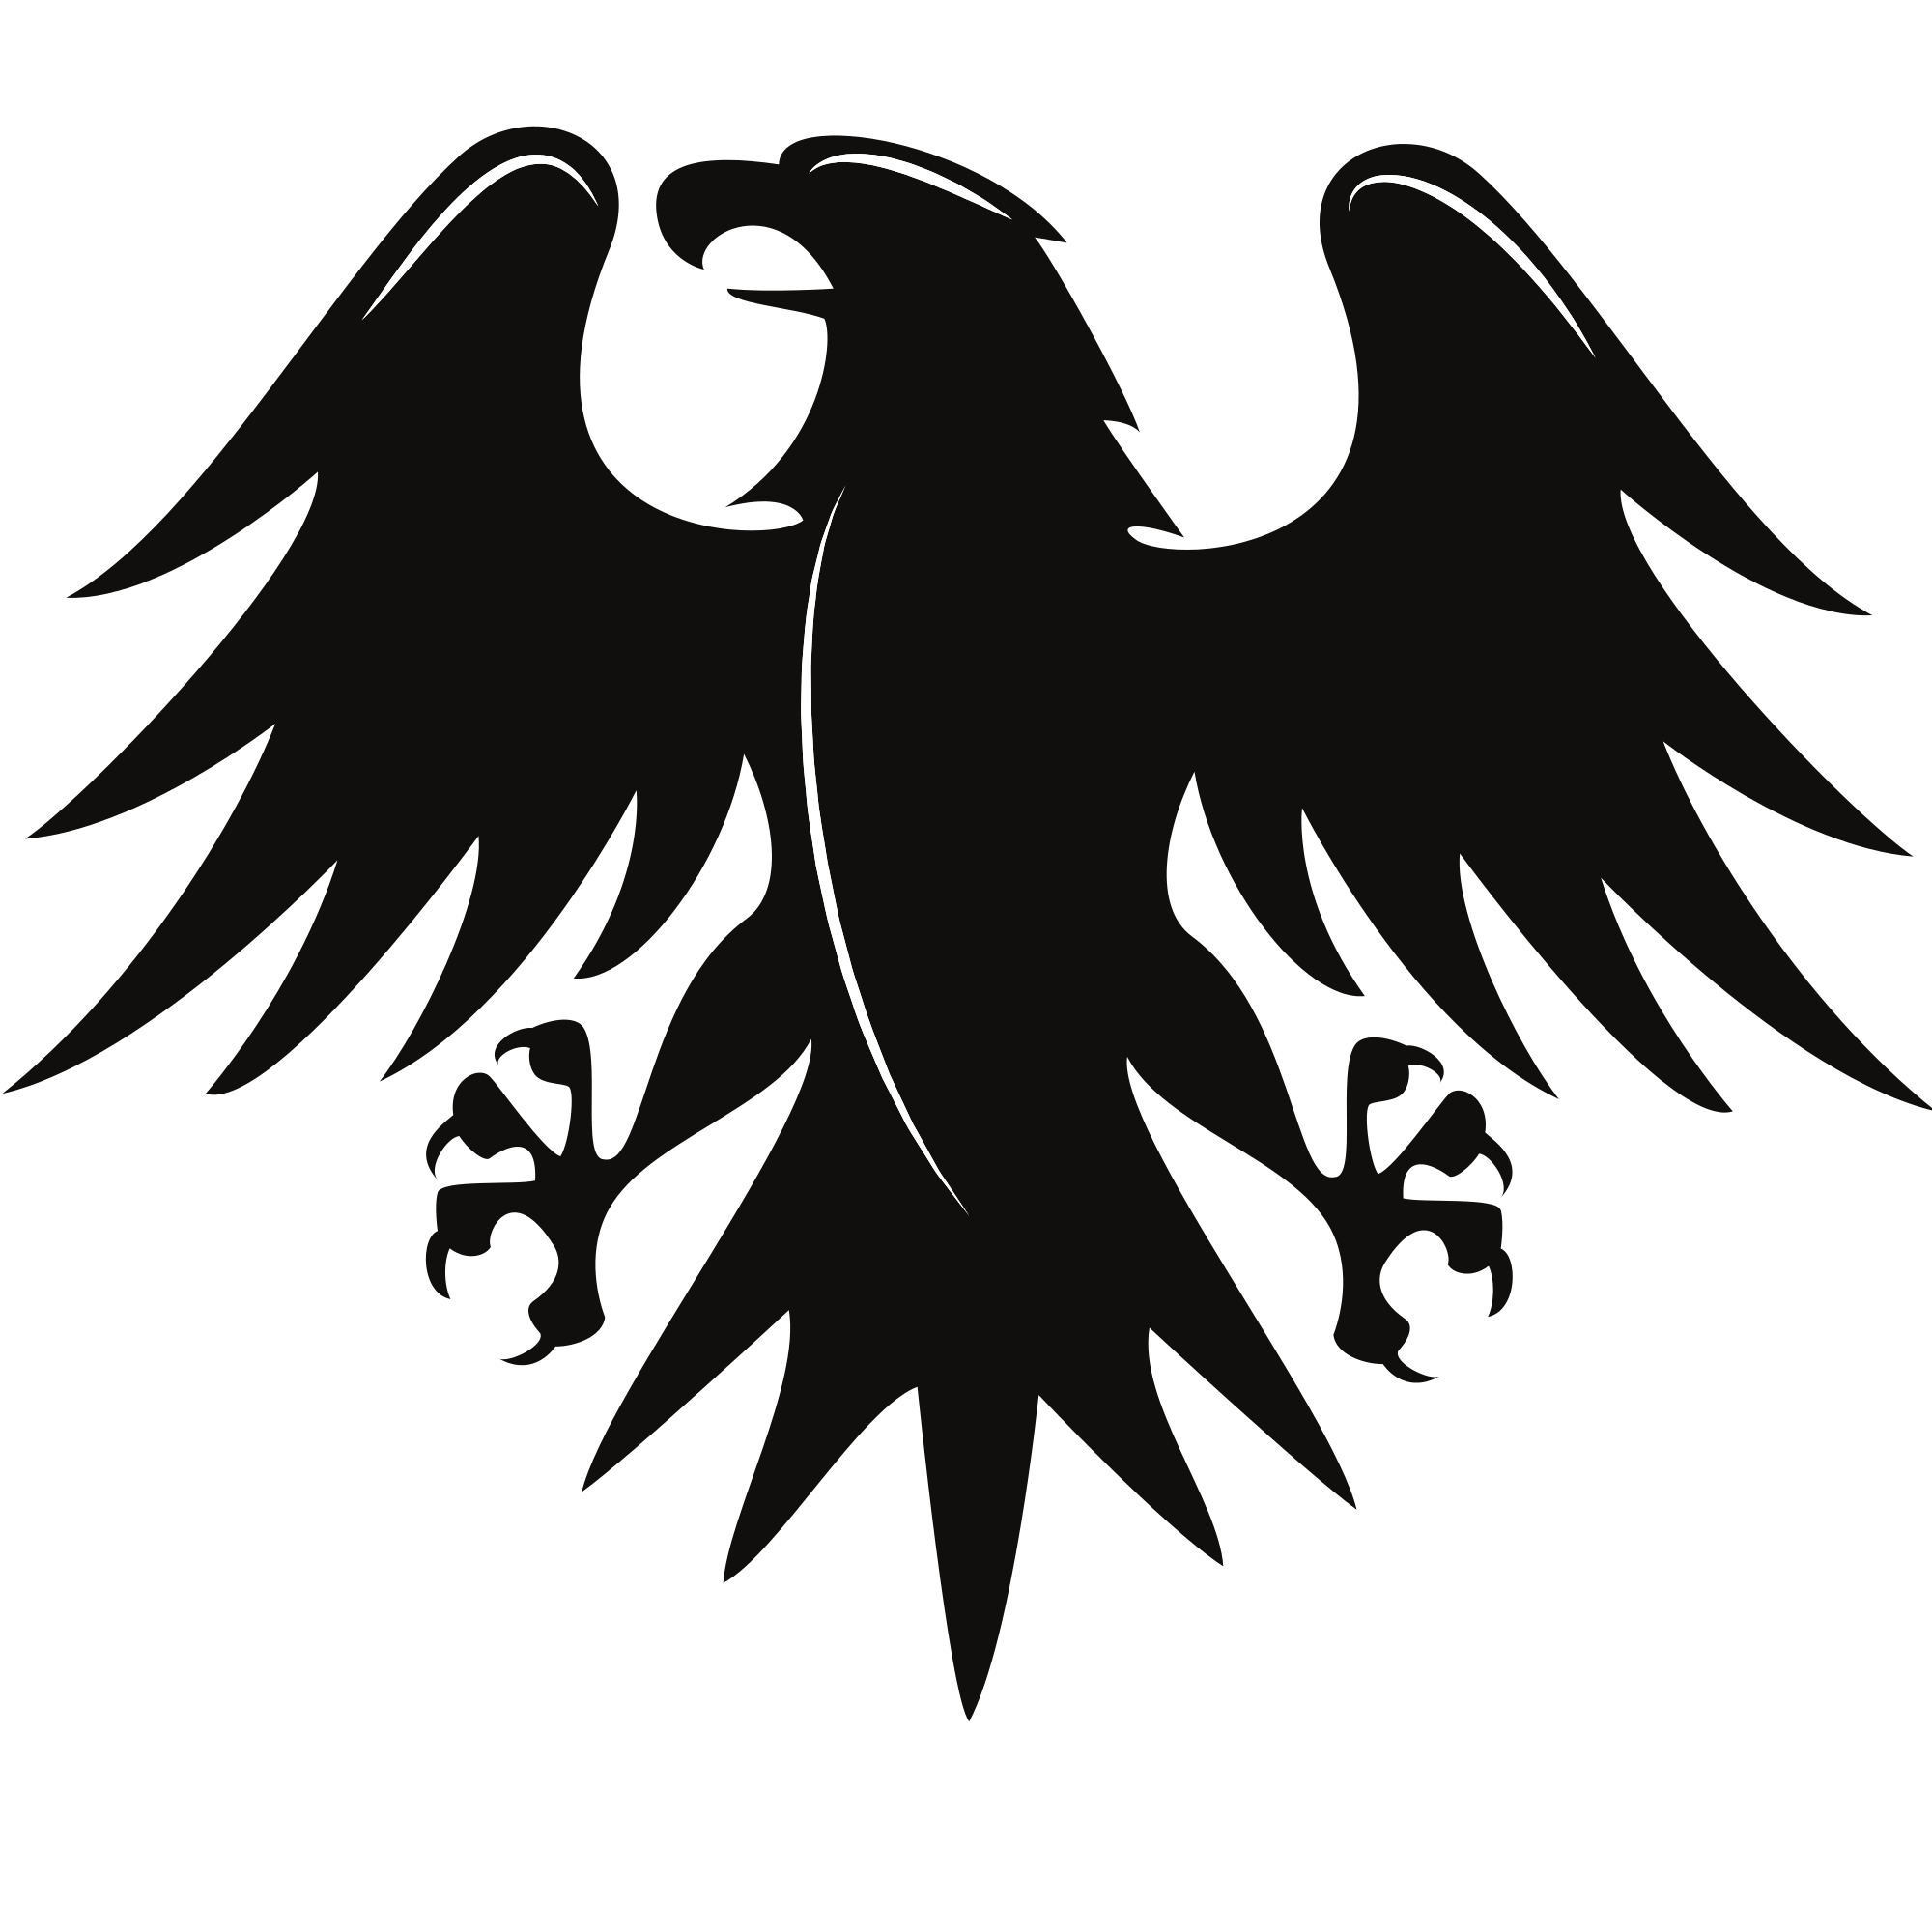 File:Black eagle vector image - Wikimedia Commons